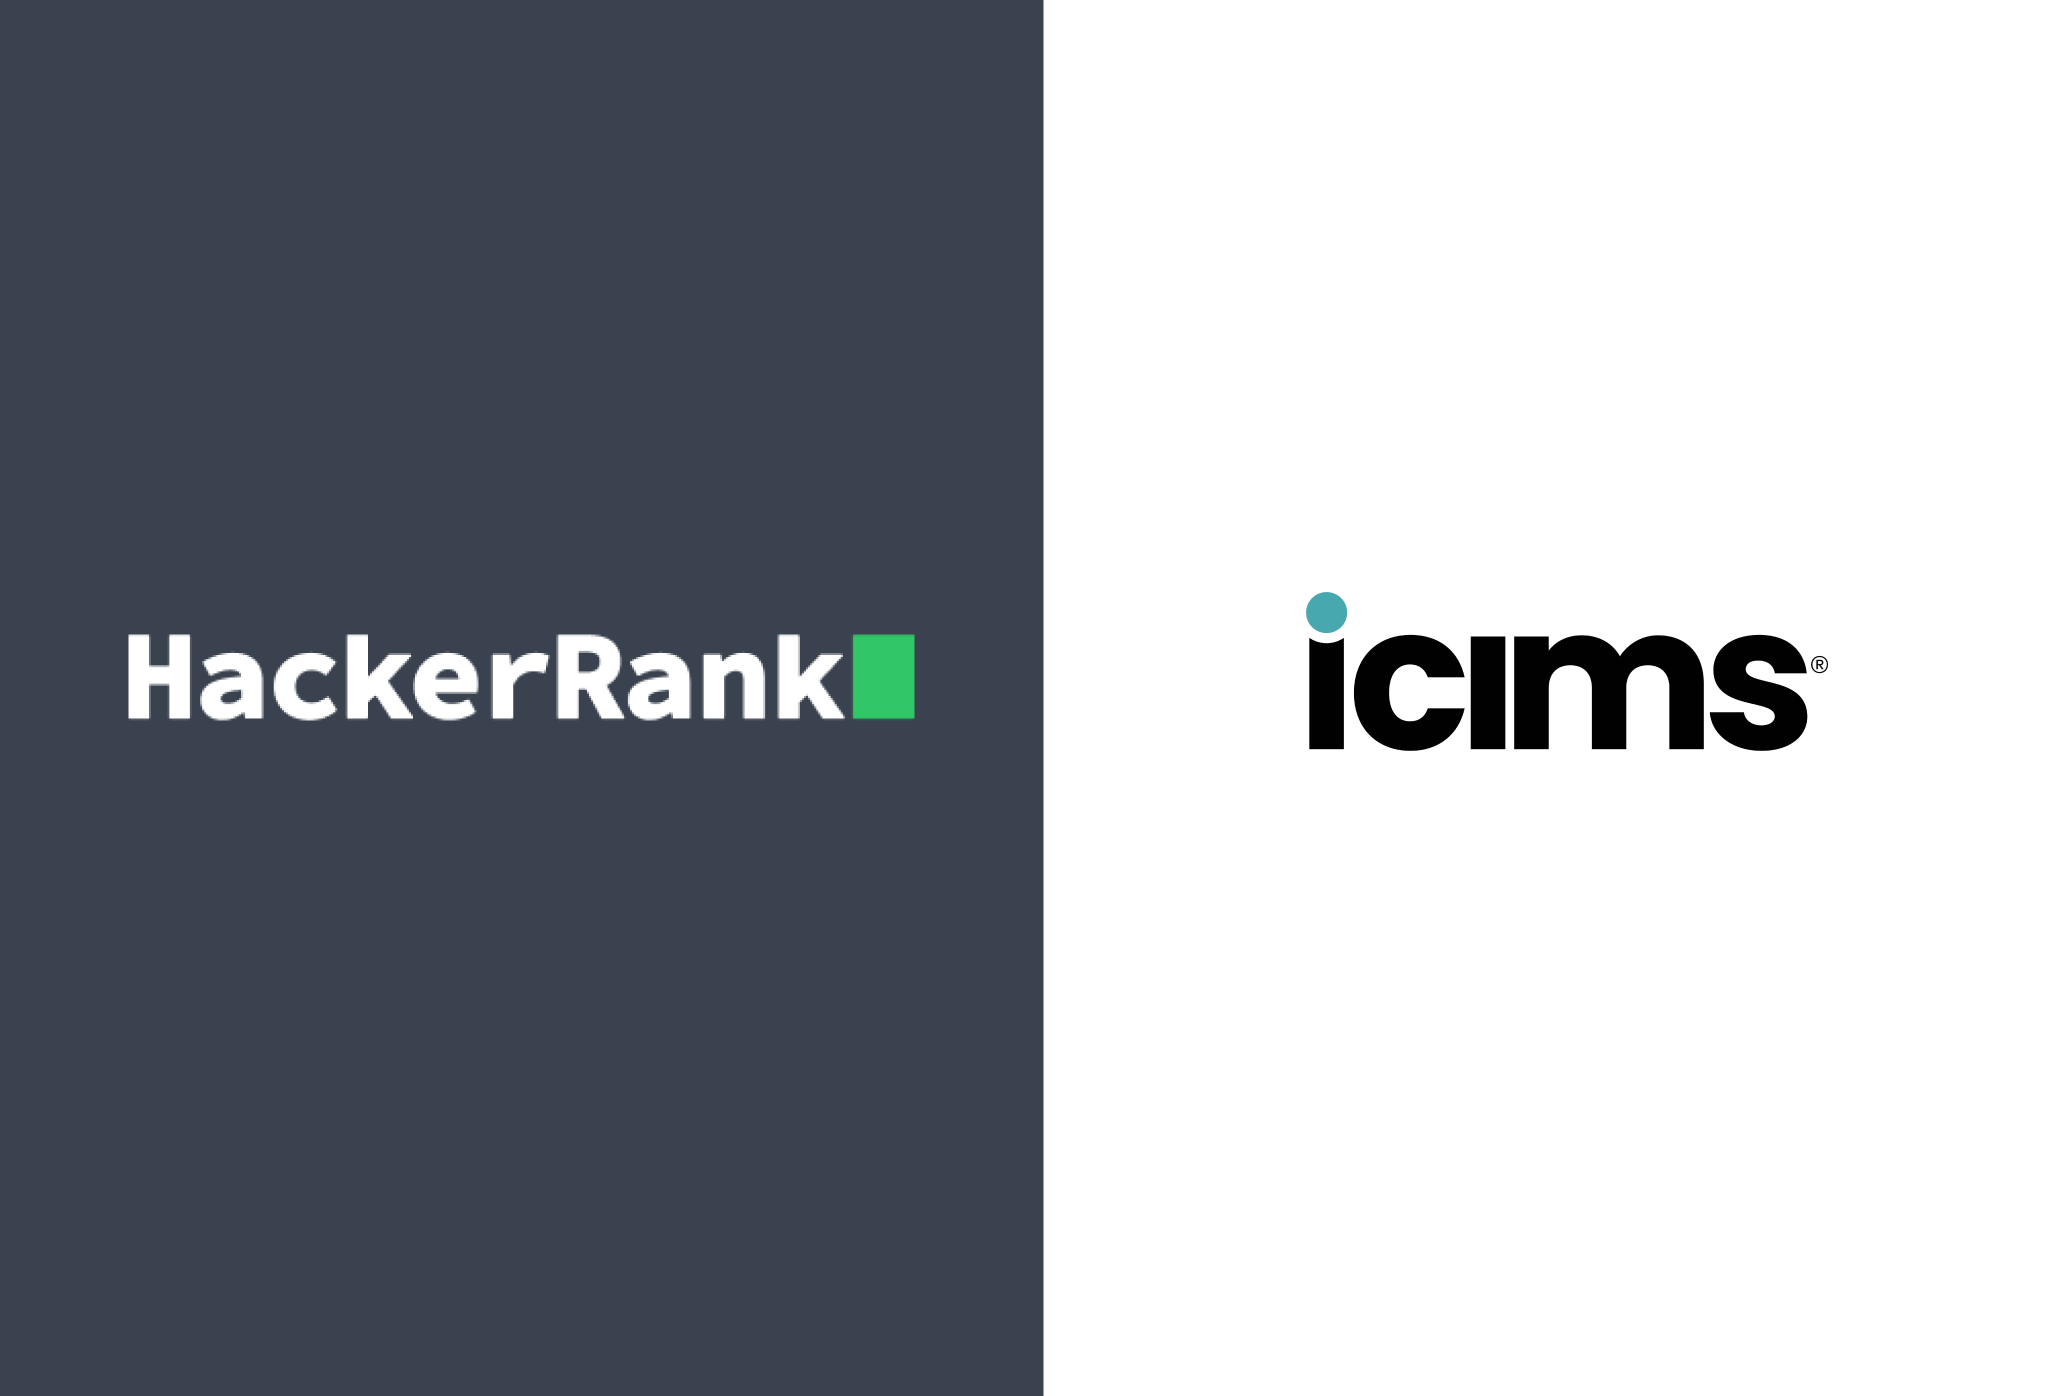 HackerRank and ICIMS logos